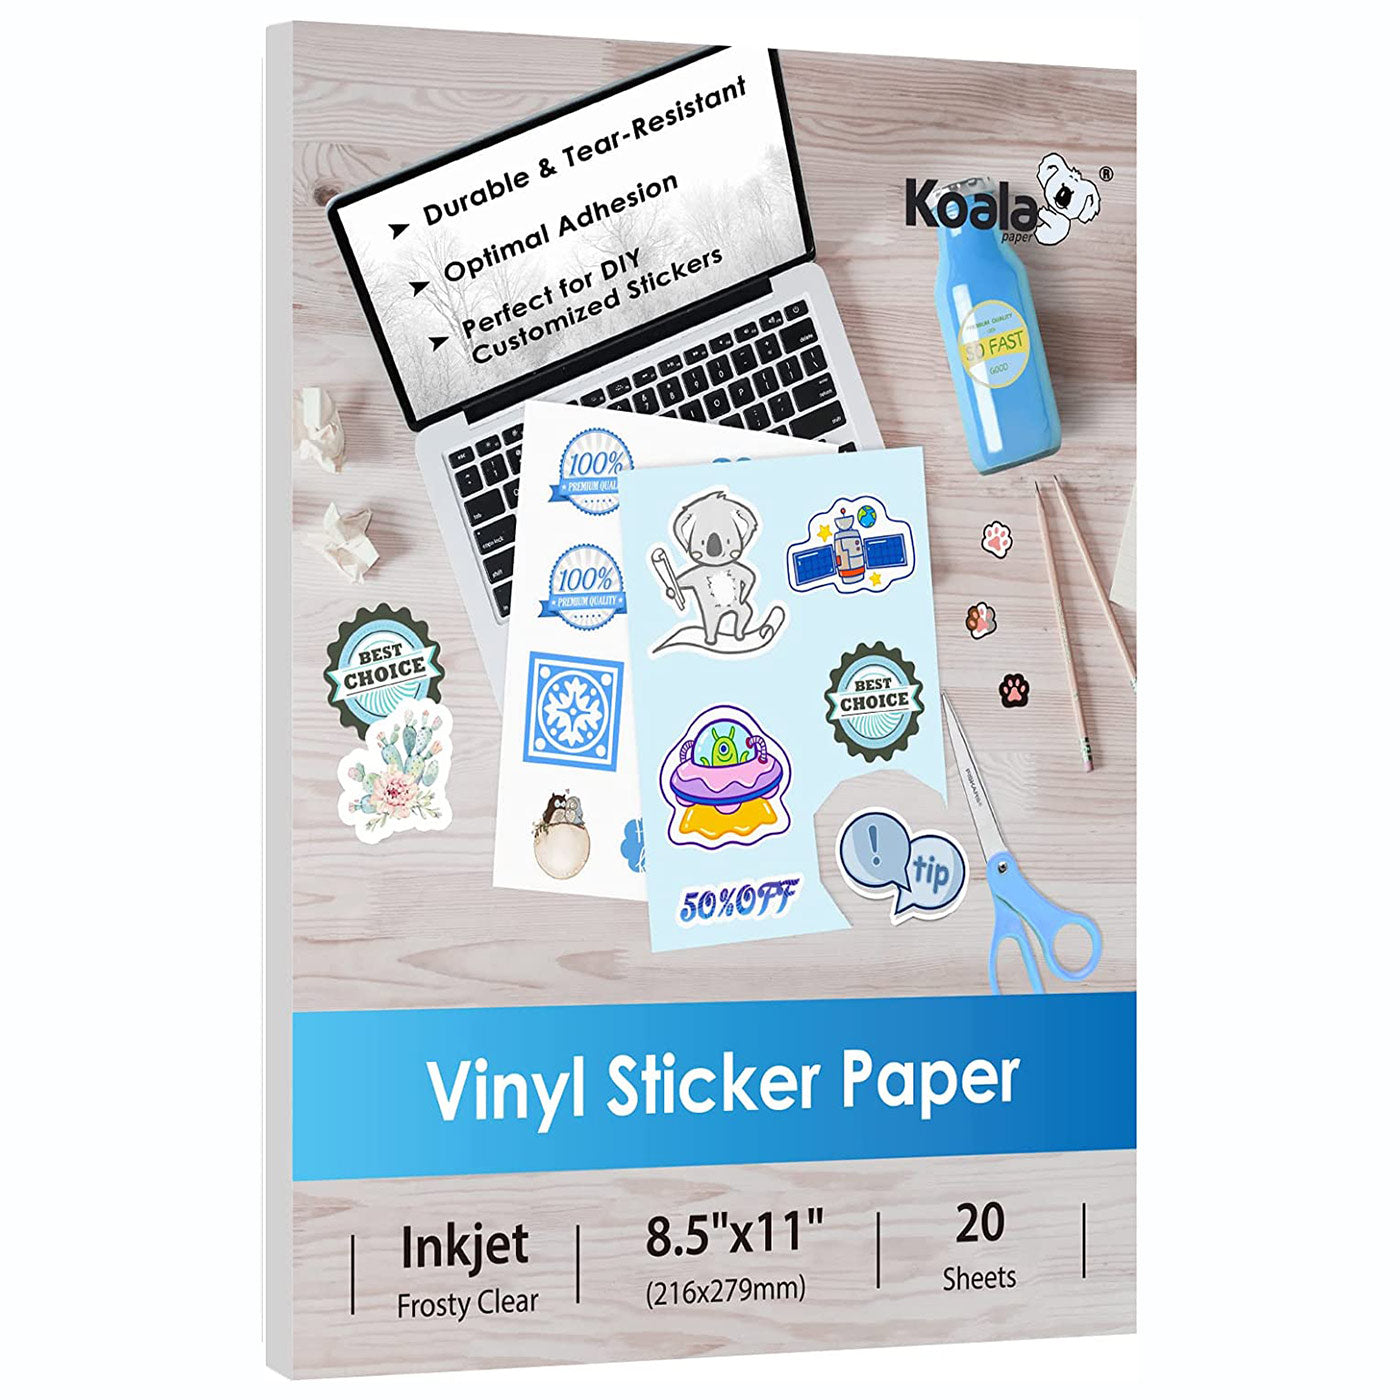 Vinyl Sticker Paper – koalagp